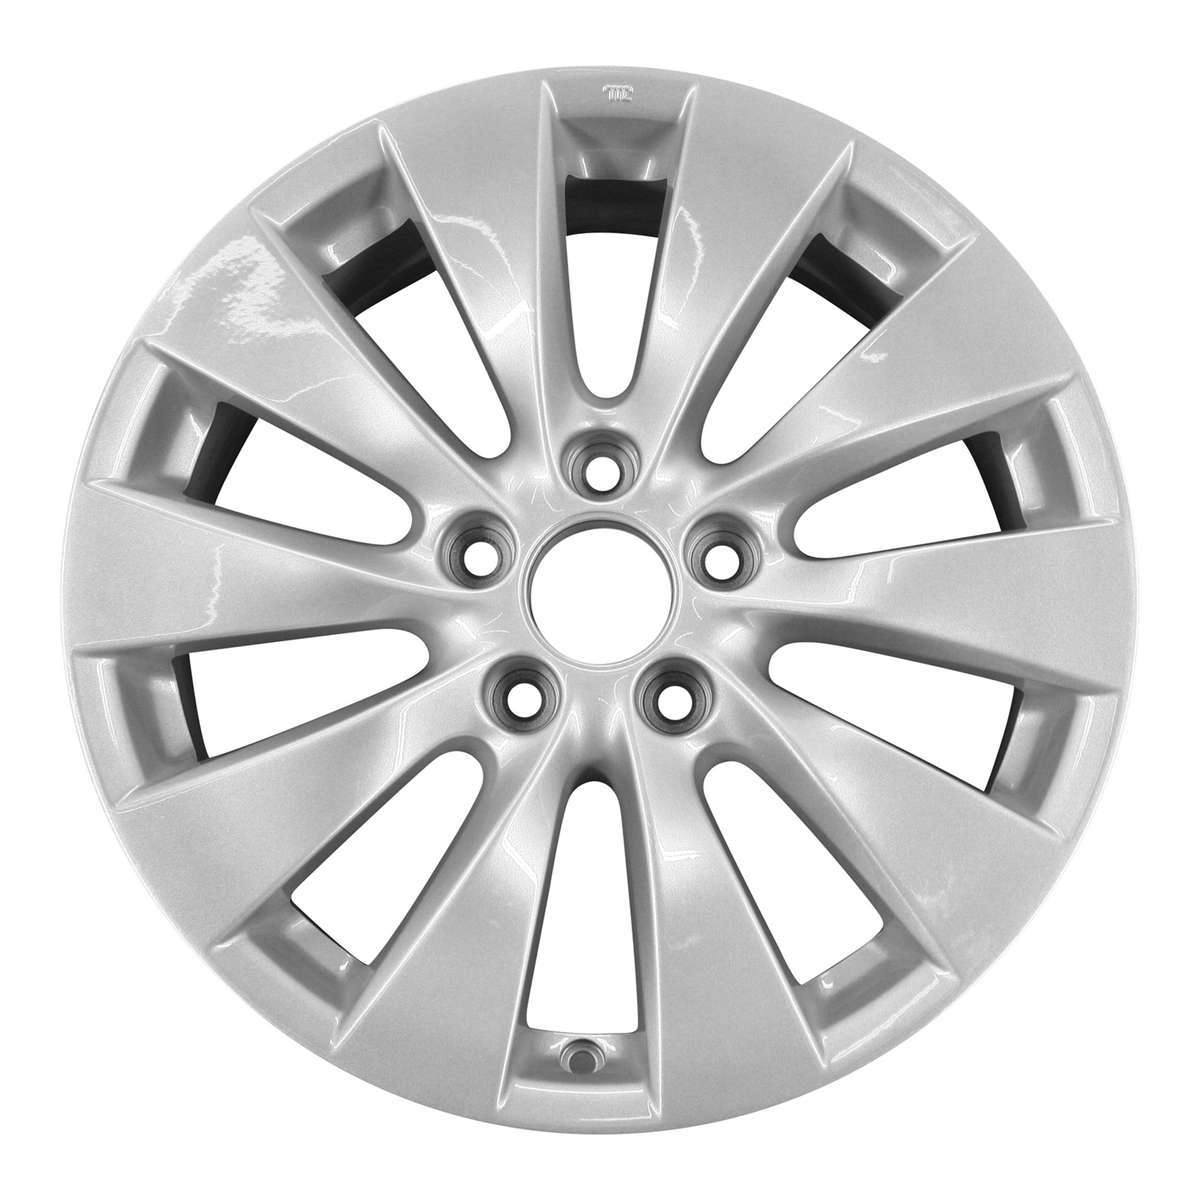 2014 Honda Accord New 17" Replacement Wheel Rim RW64047S